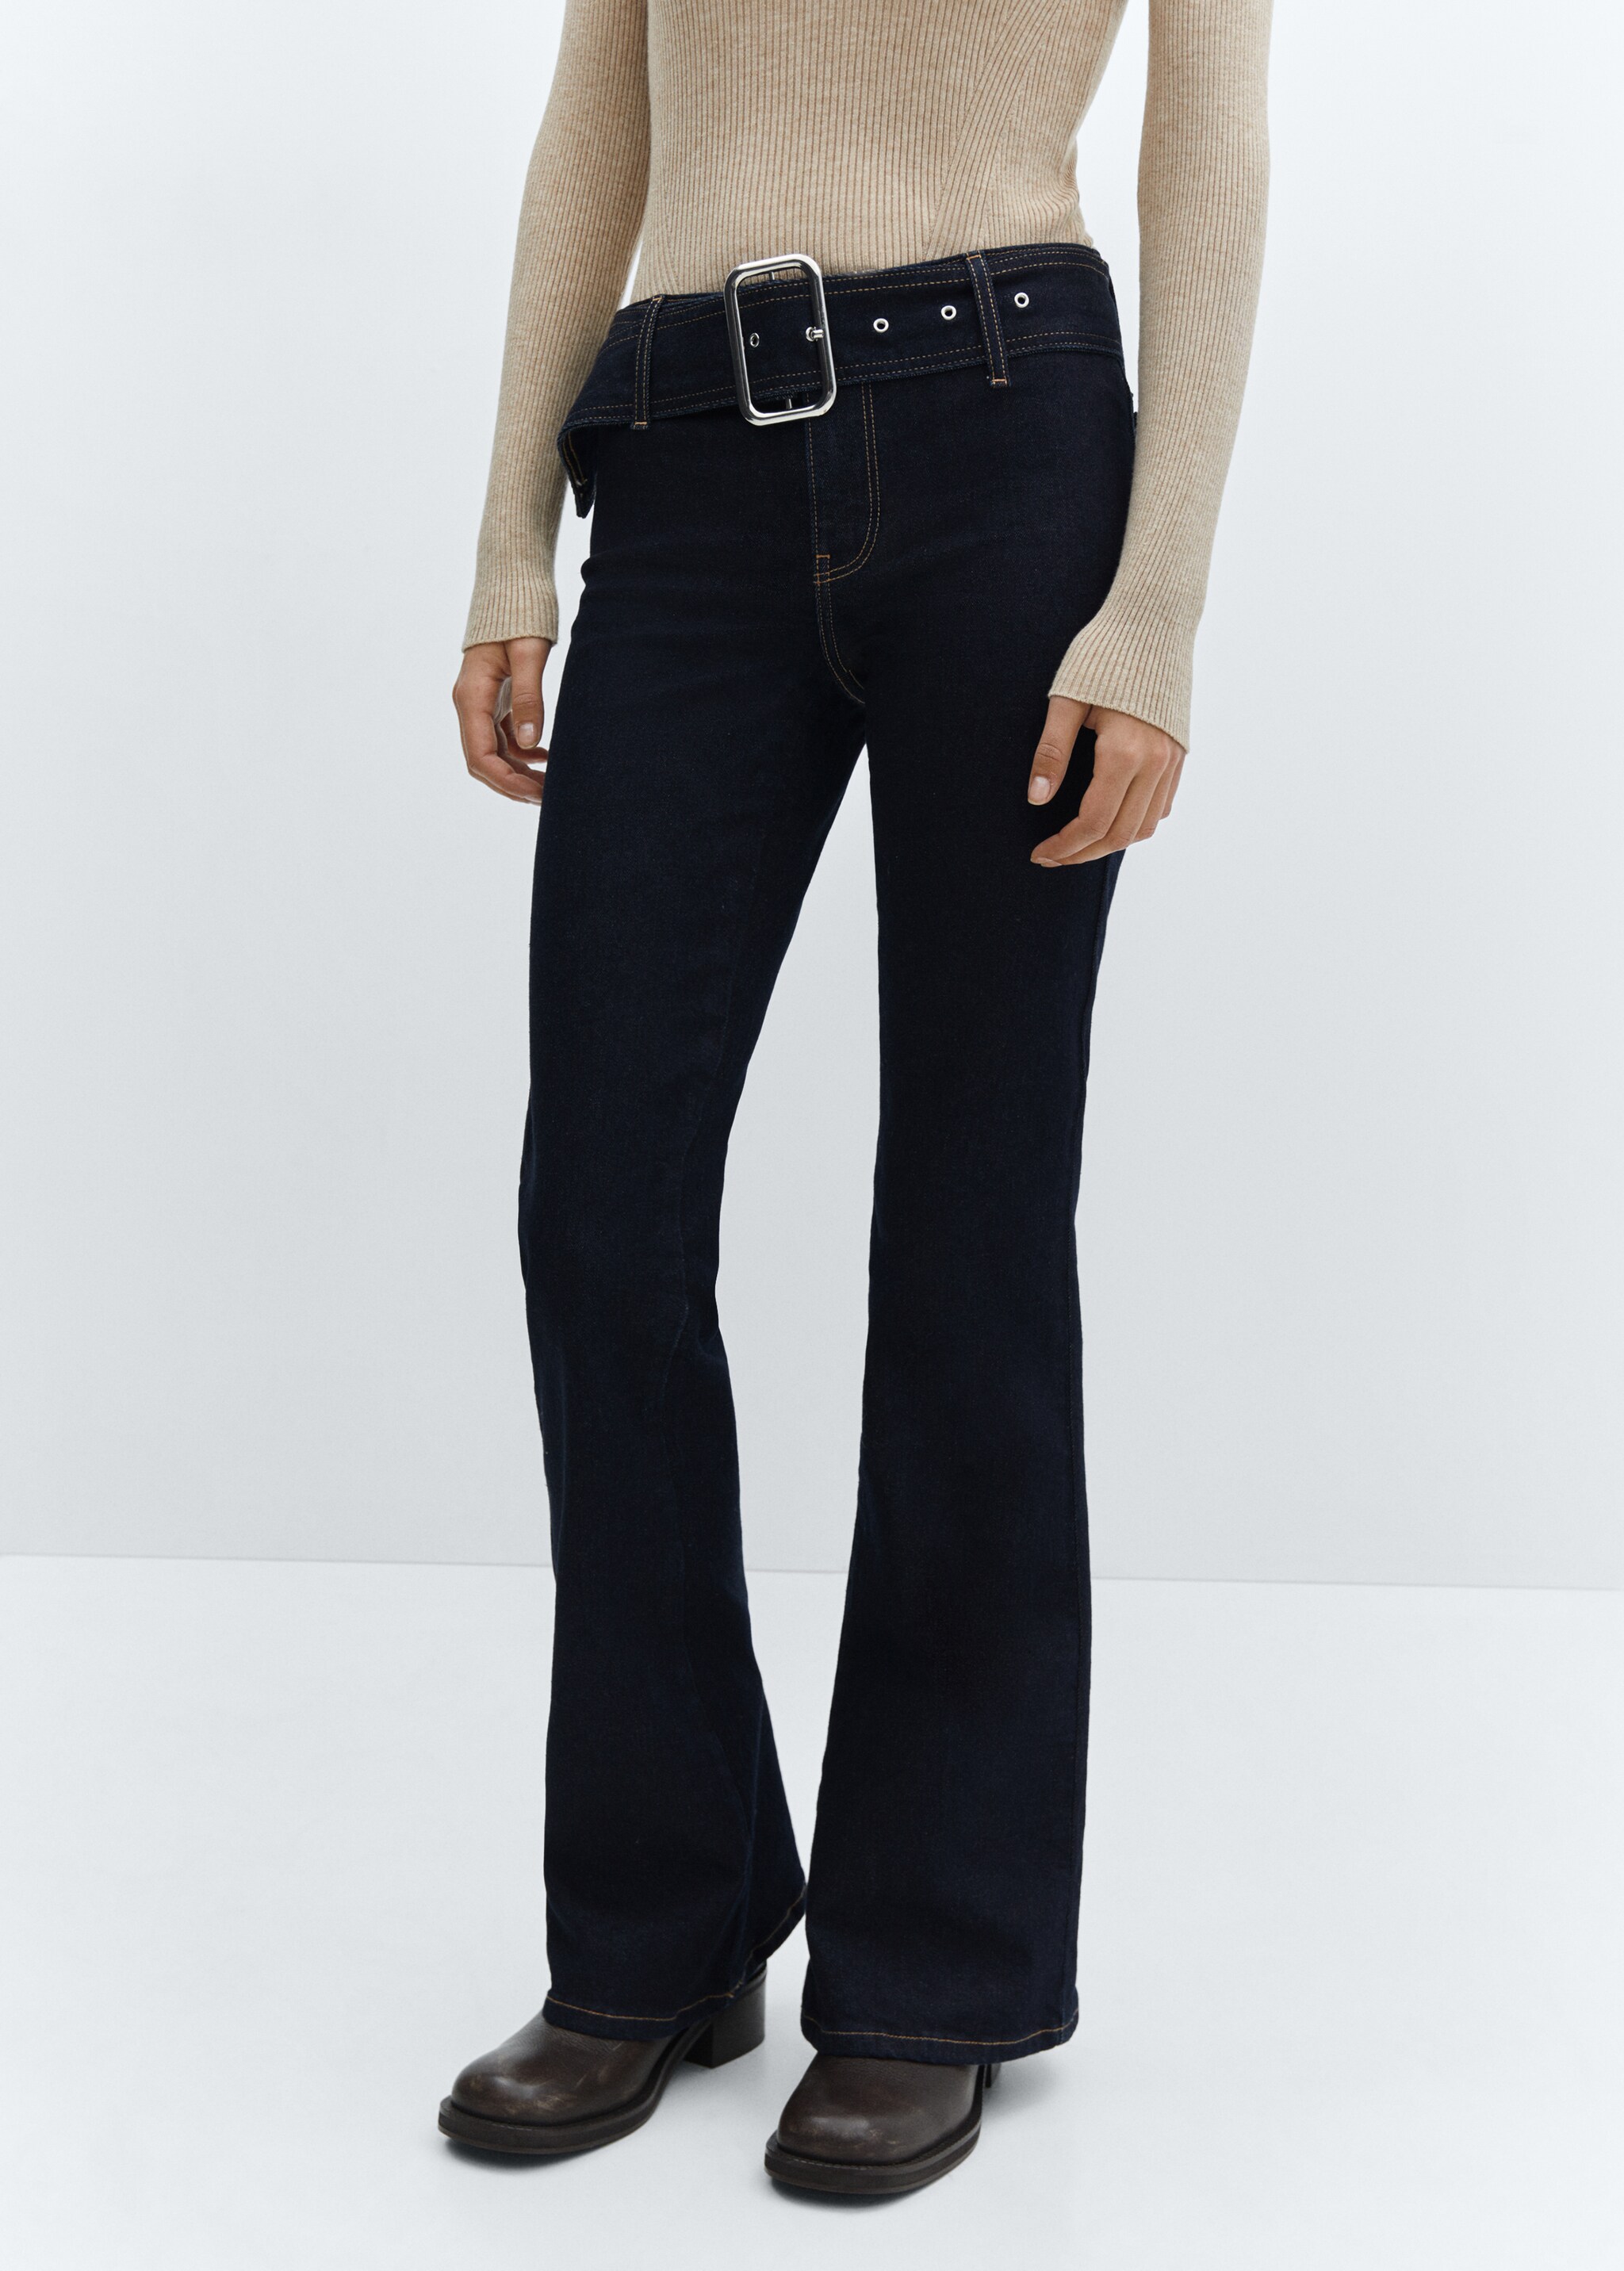 Flared jeans with belt - Medium plane